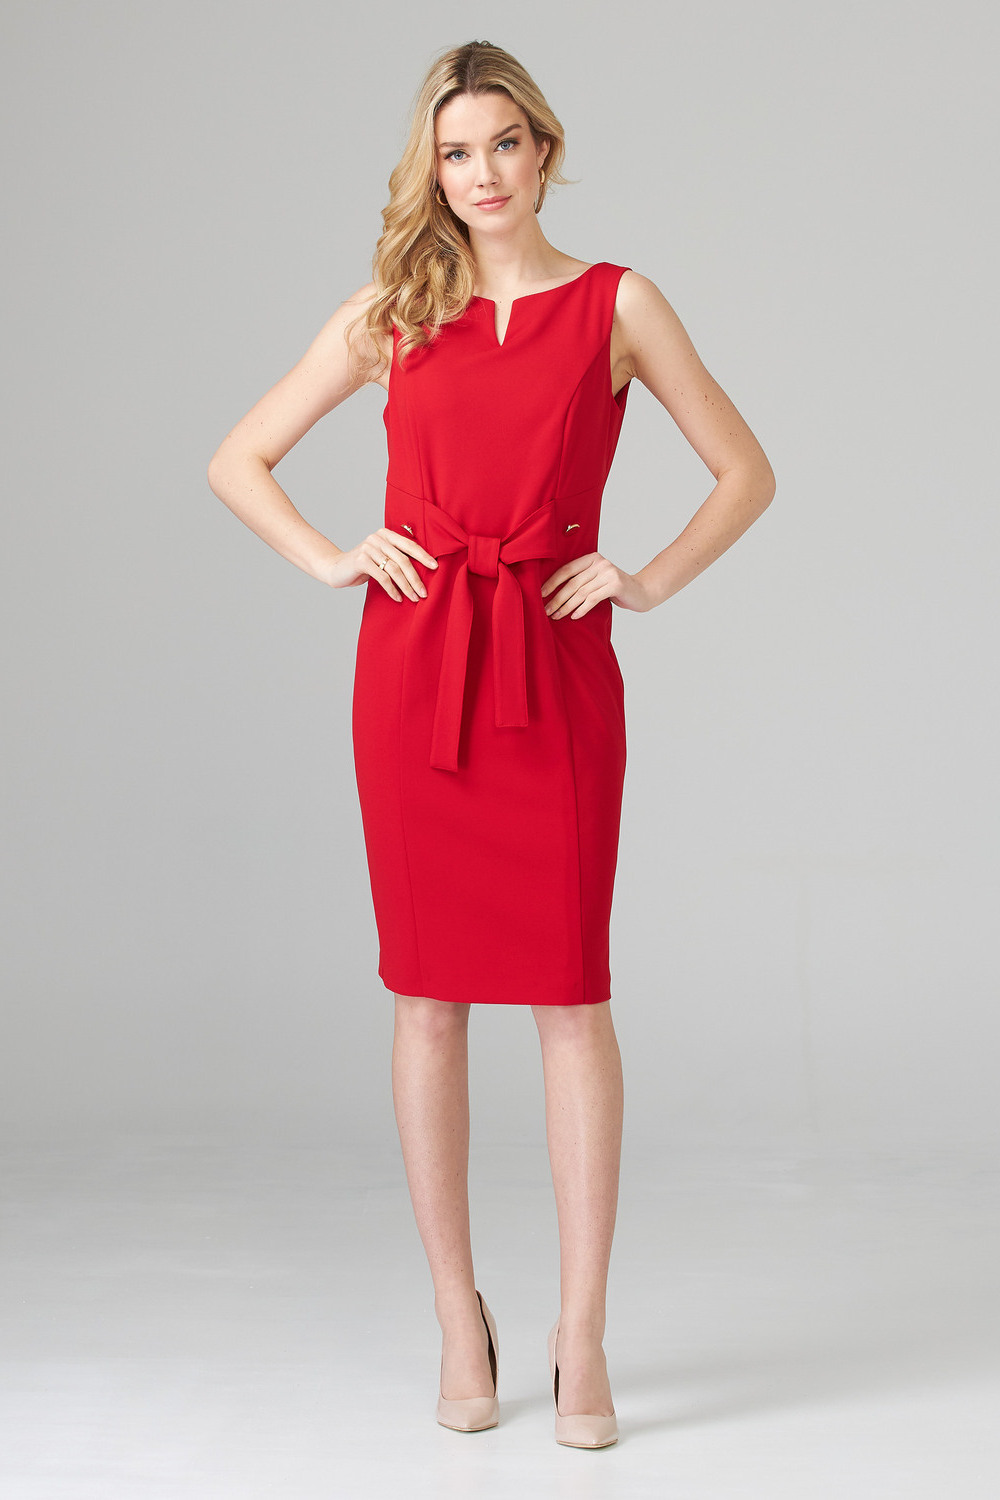 Joseph Ribkoff Dress Style 201514. Lipstick Red 173